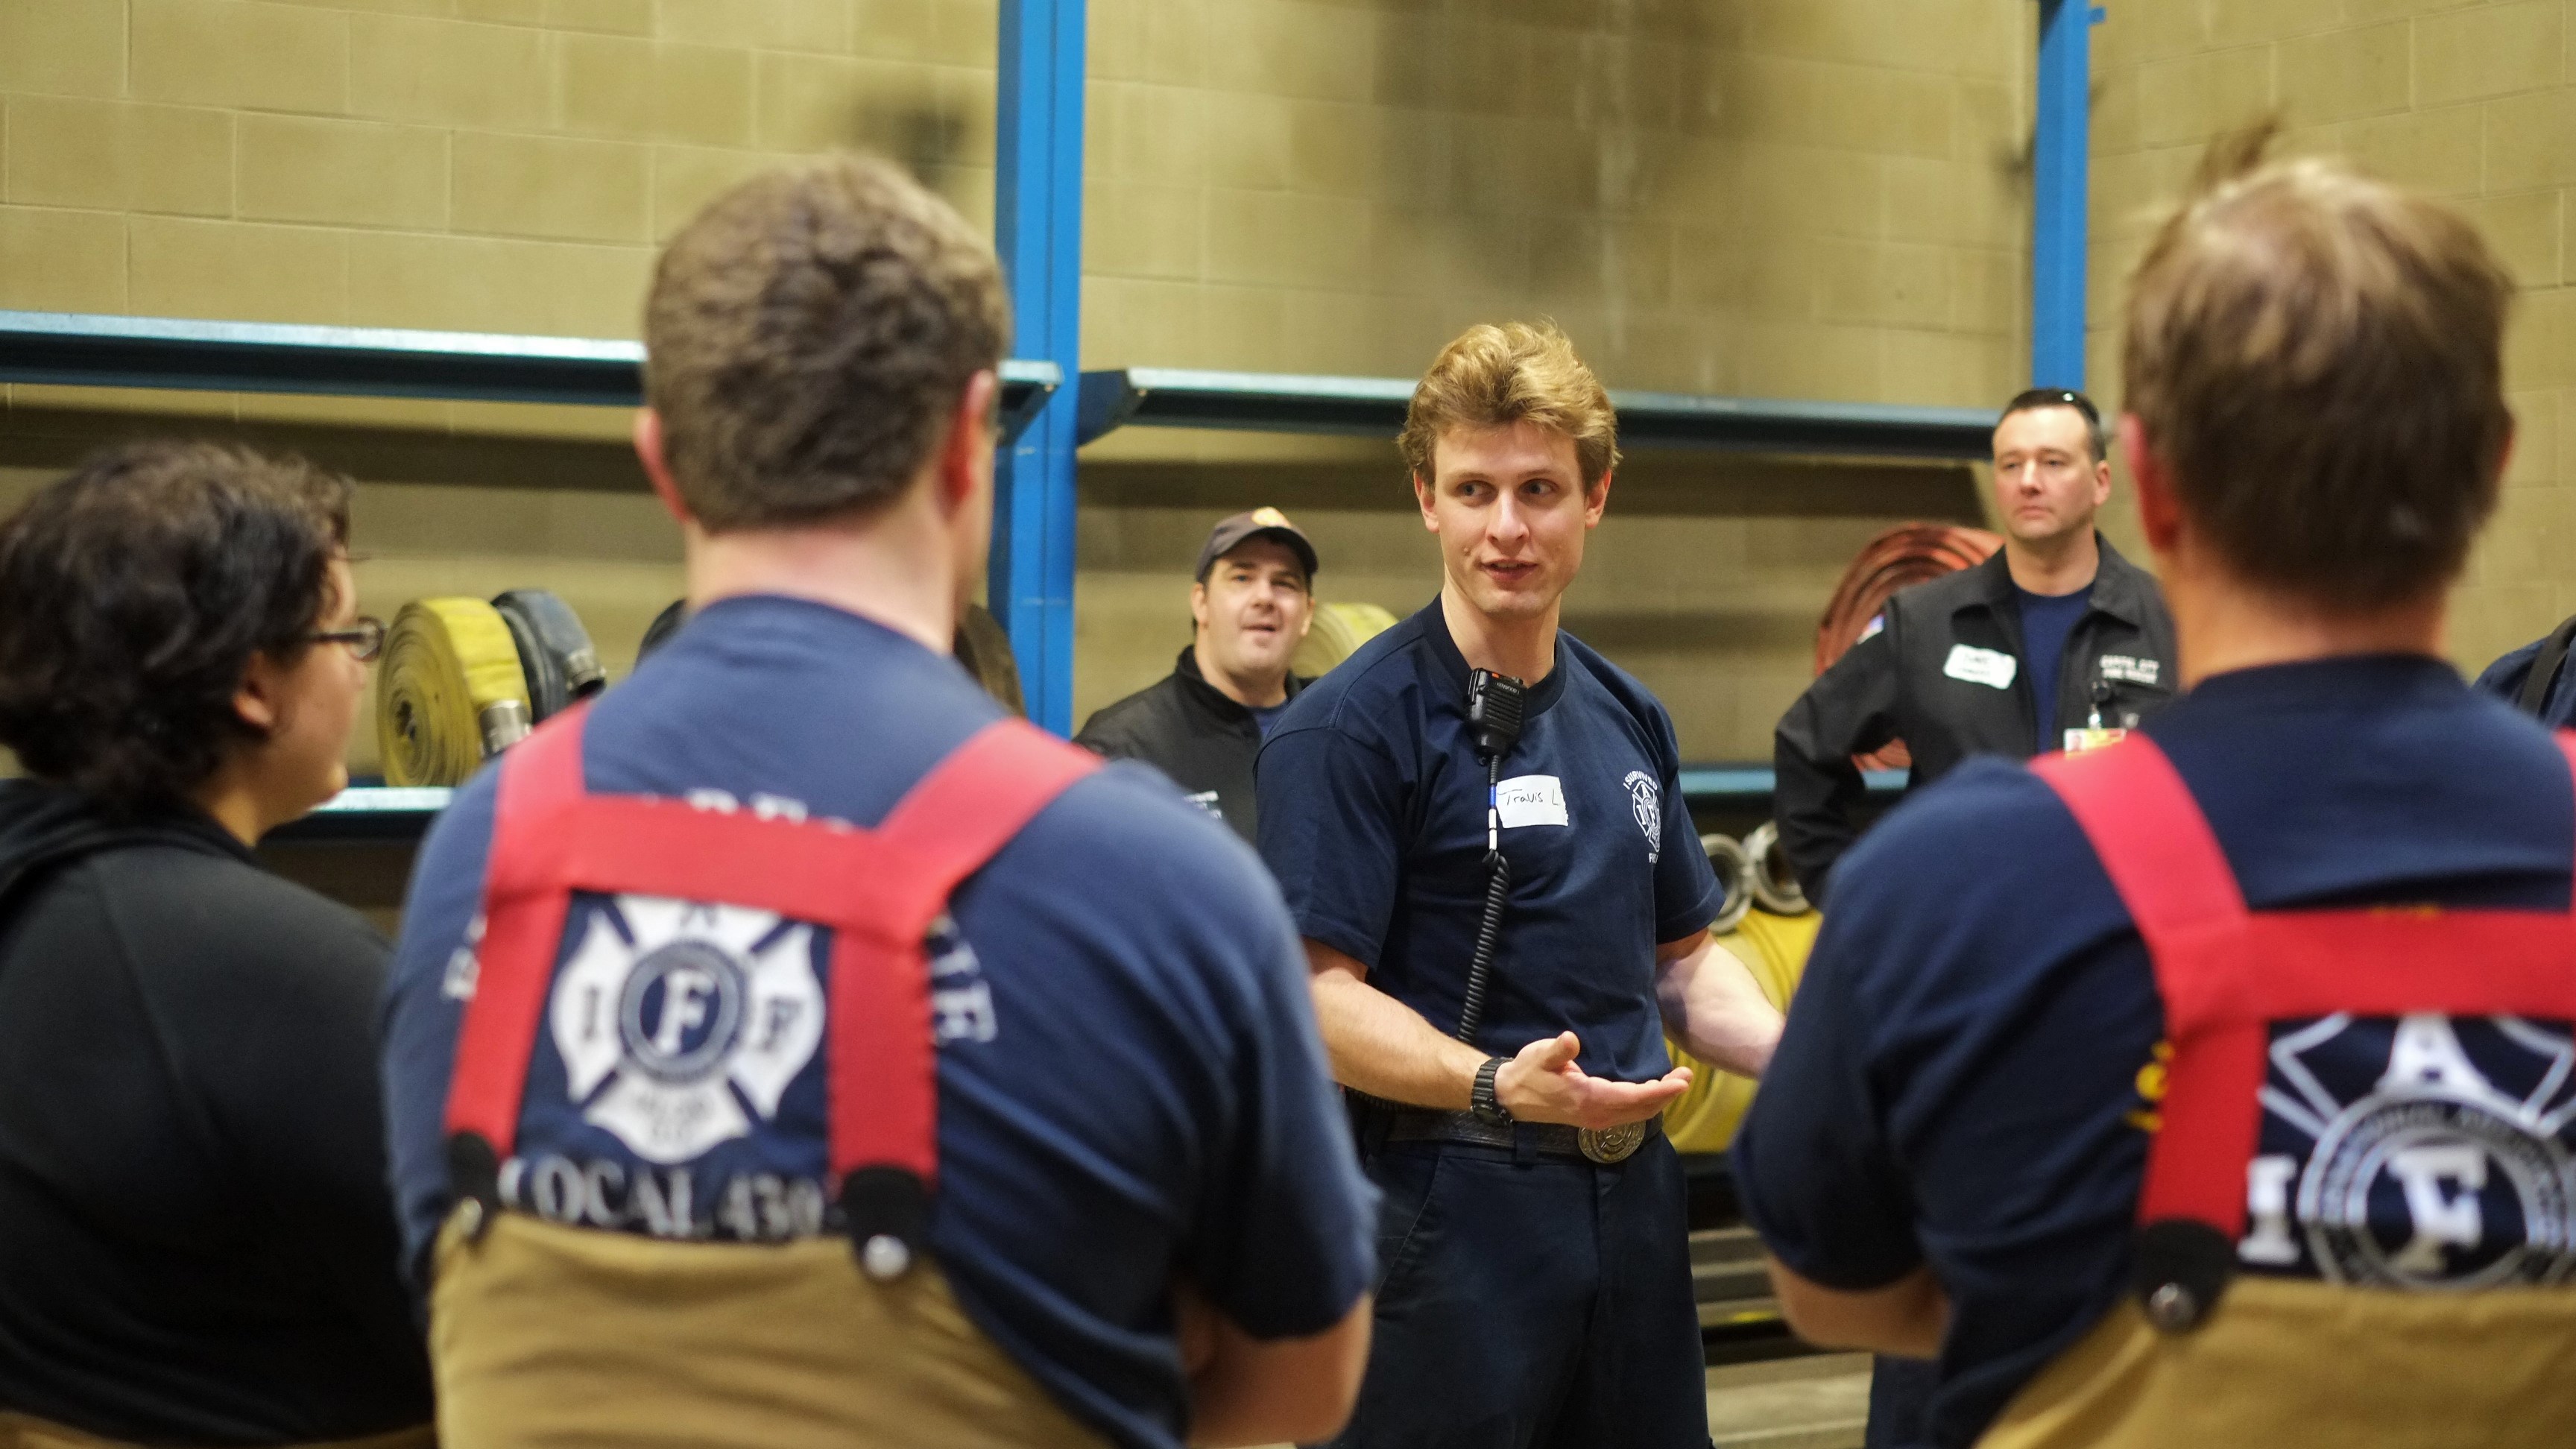 EMT Travis Larsen briefs participants on the CPR training at Hagevig Fire Training Center. (Photo by Annie Bartholomew/KTOO)